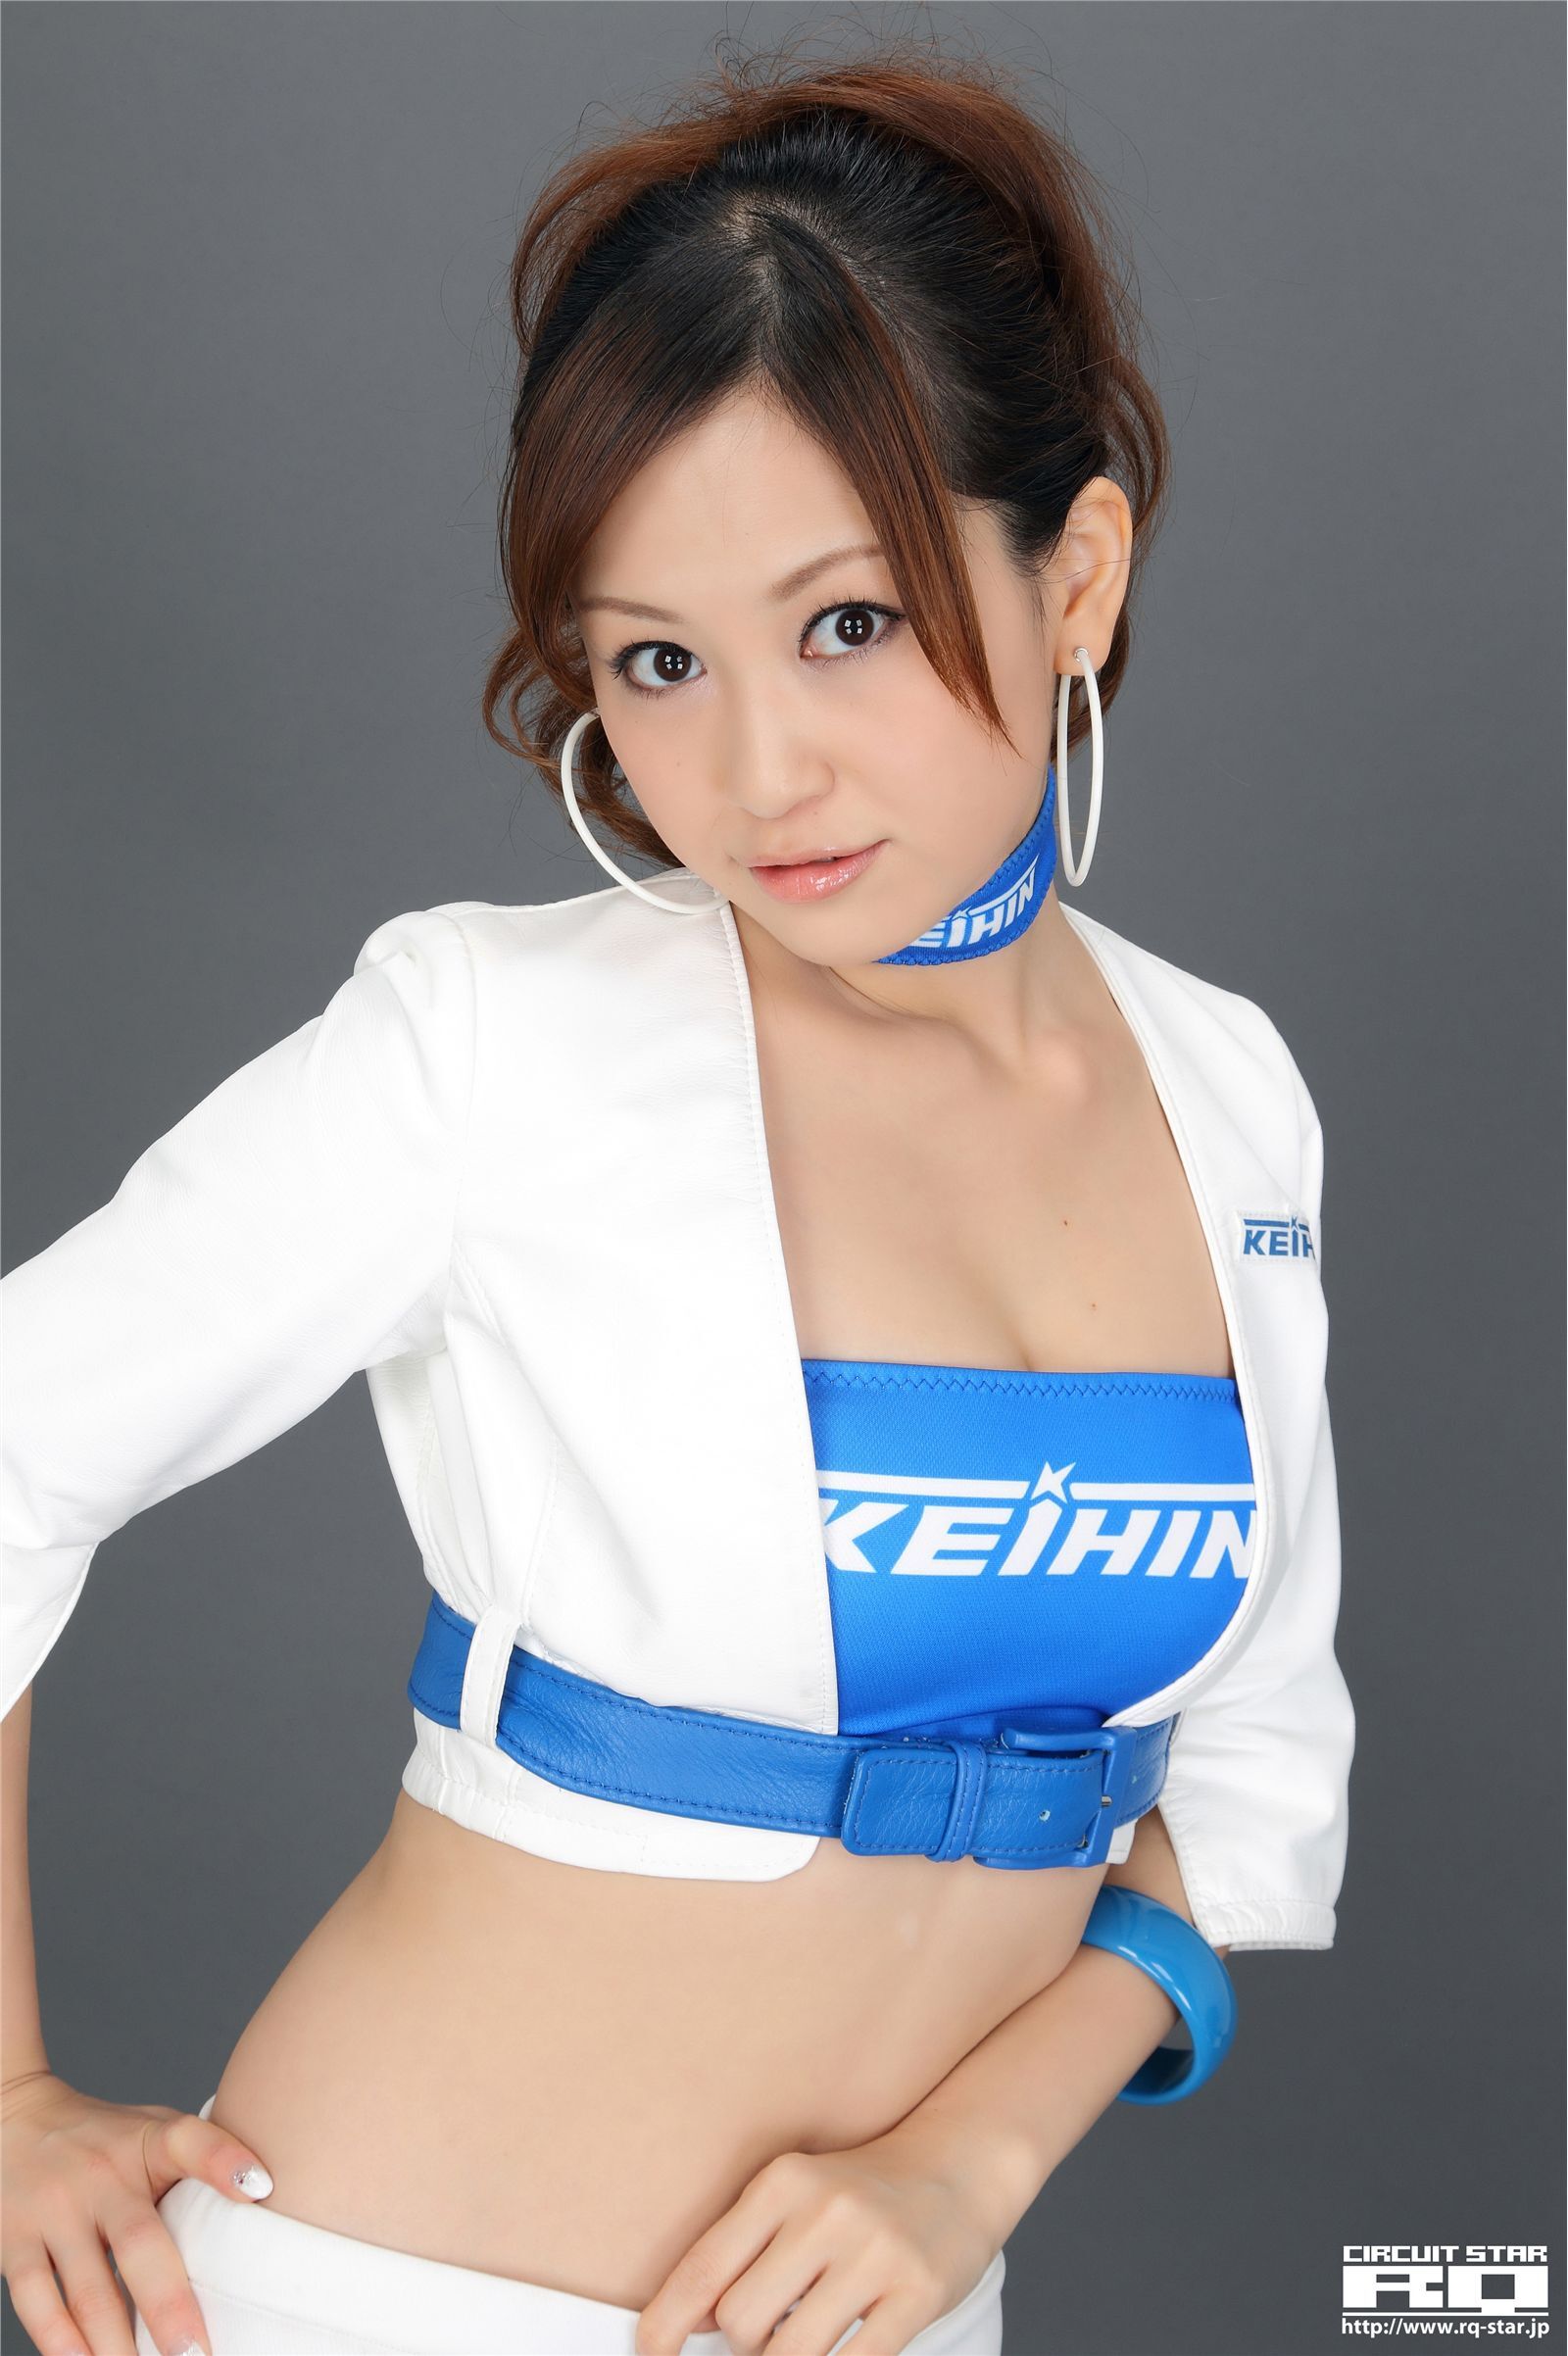 High definition Japanese uniform beauty picture [RQ stat] [02-20] no.00604